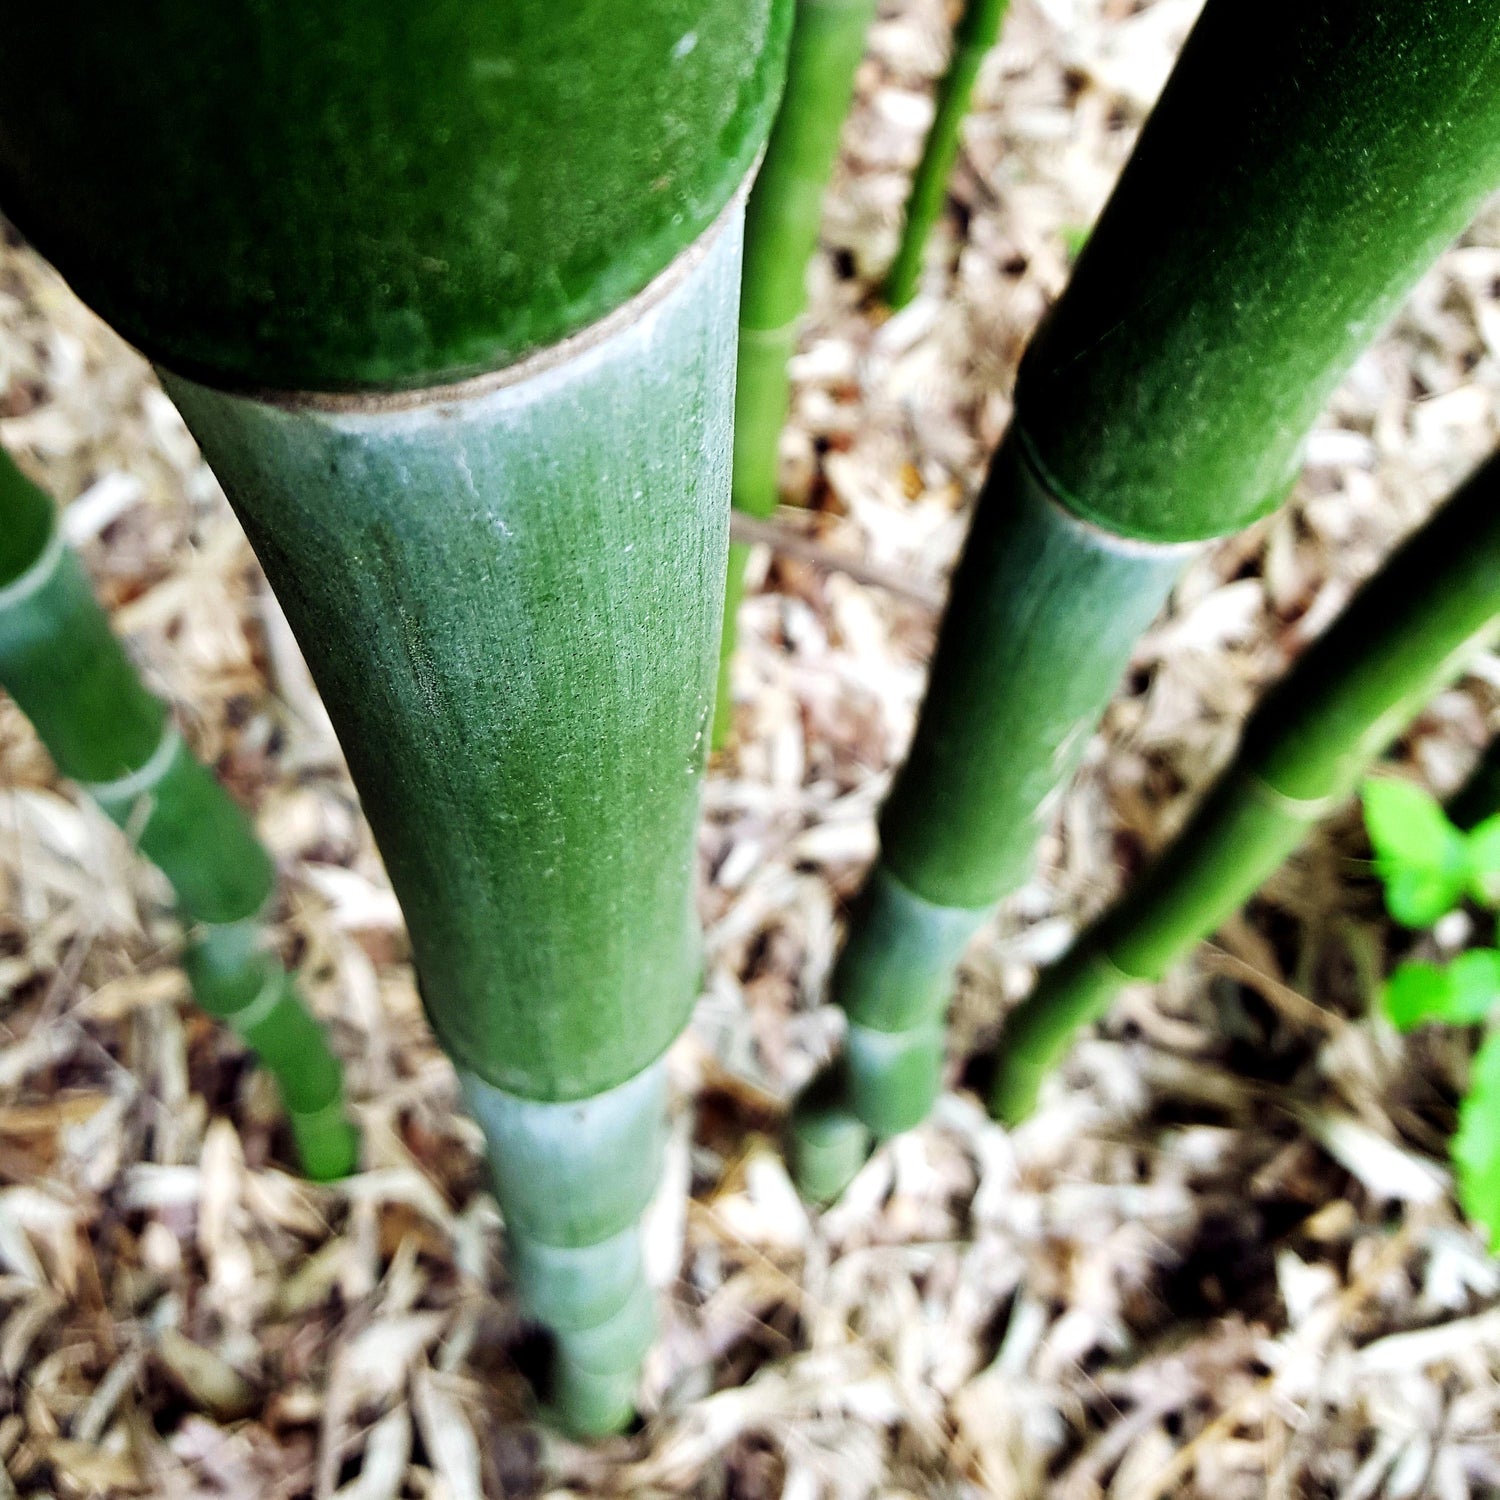 Bamboo Culms